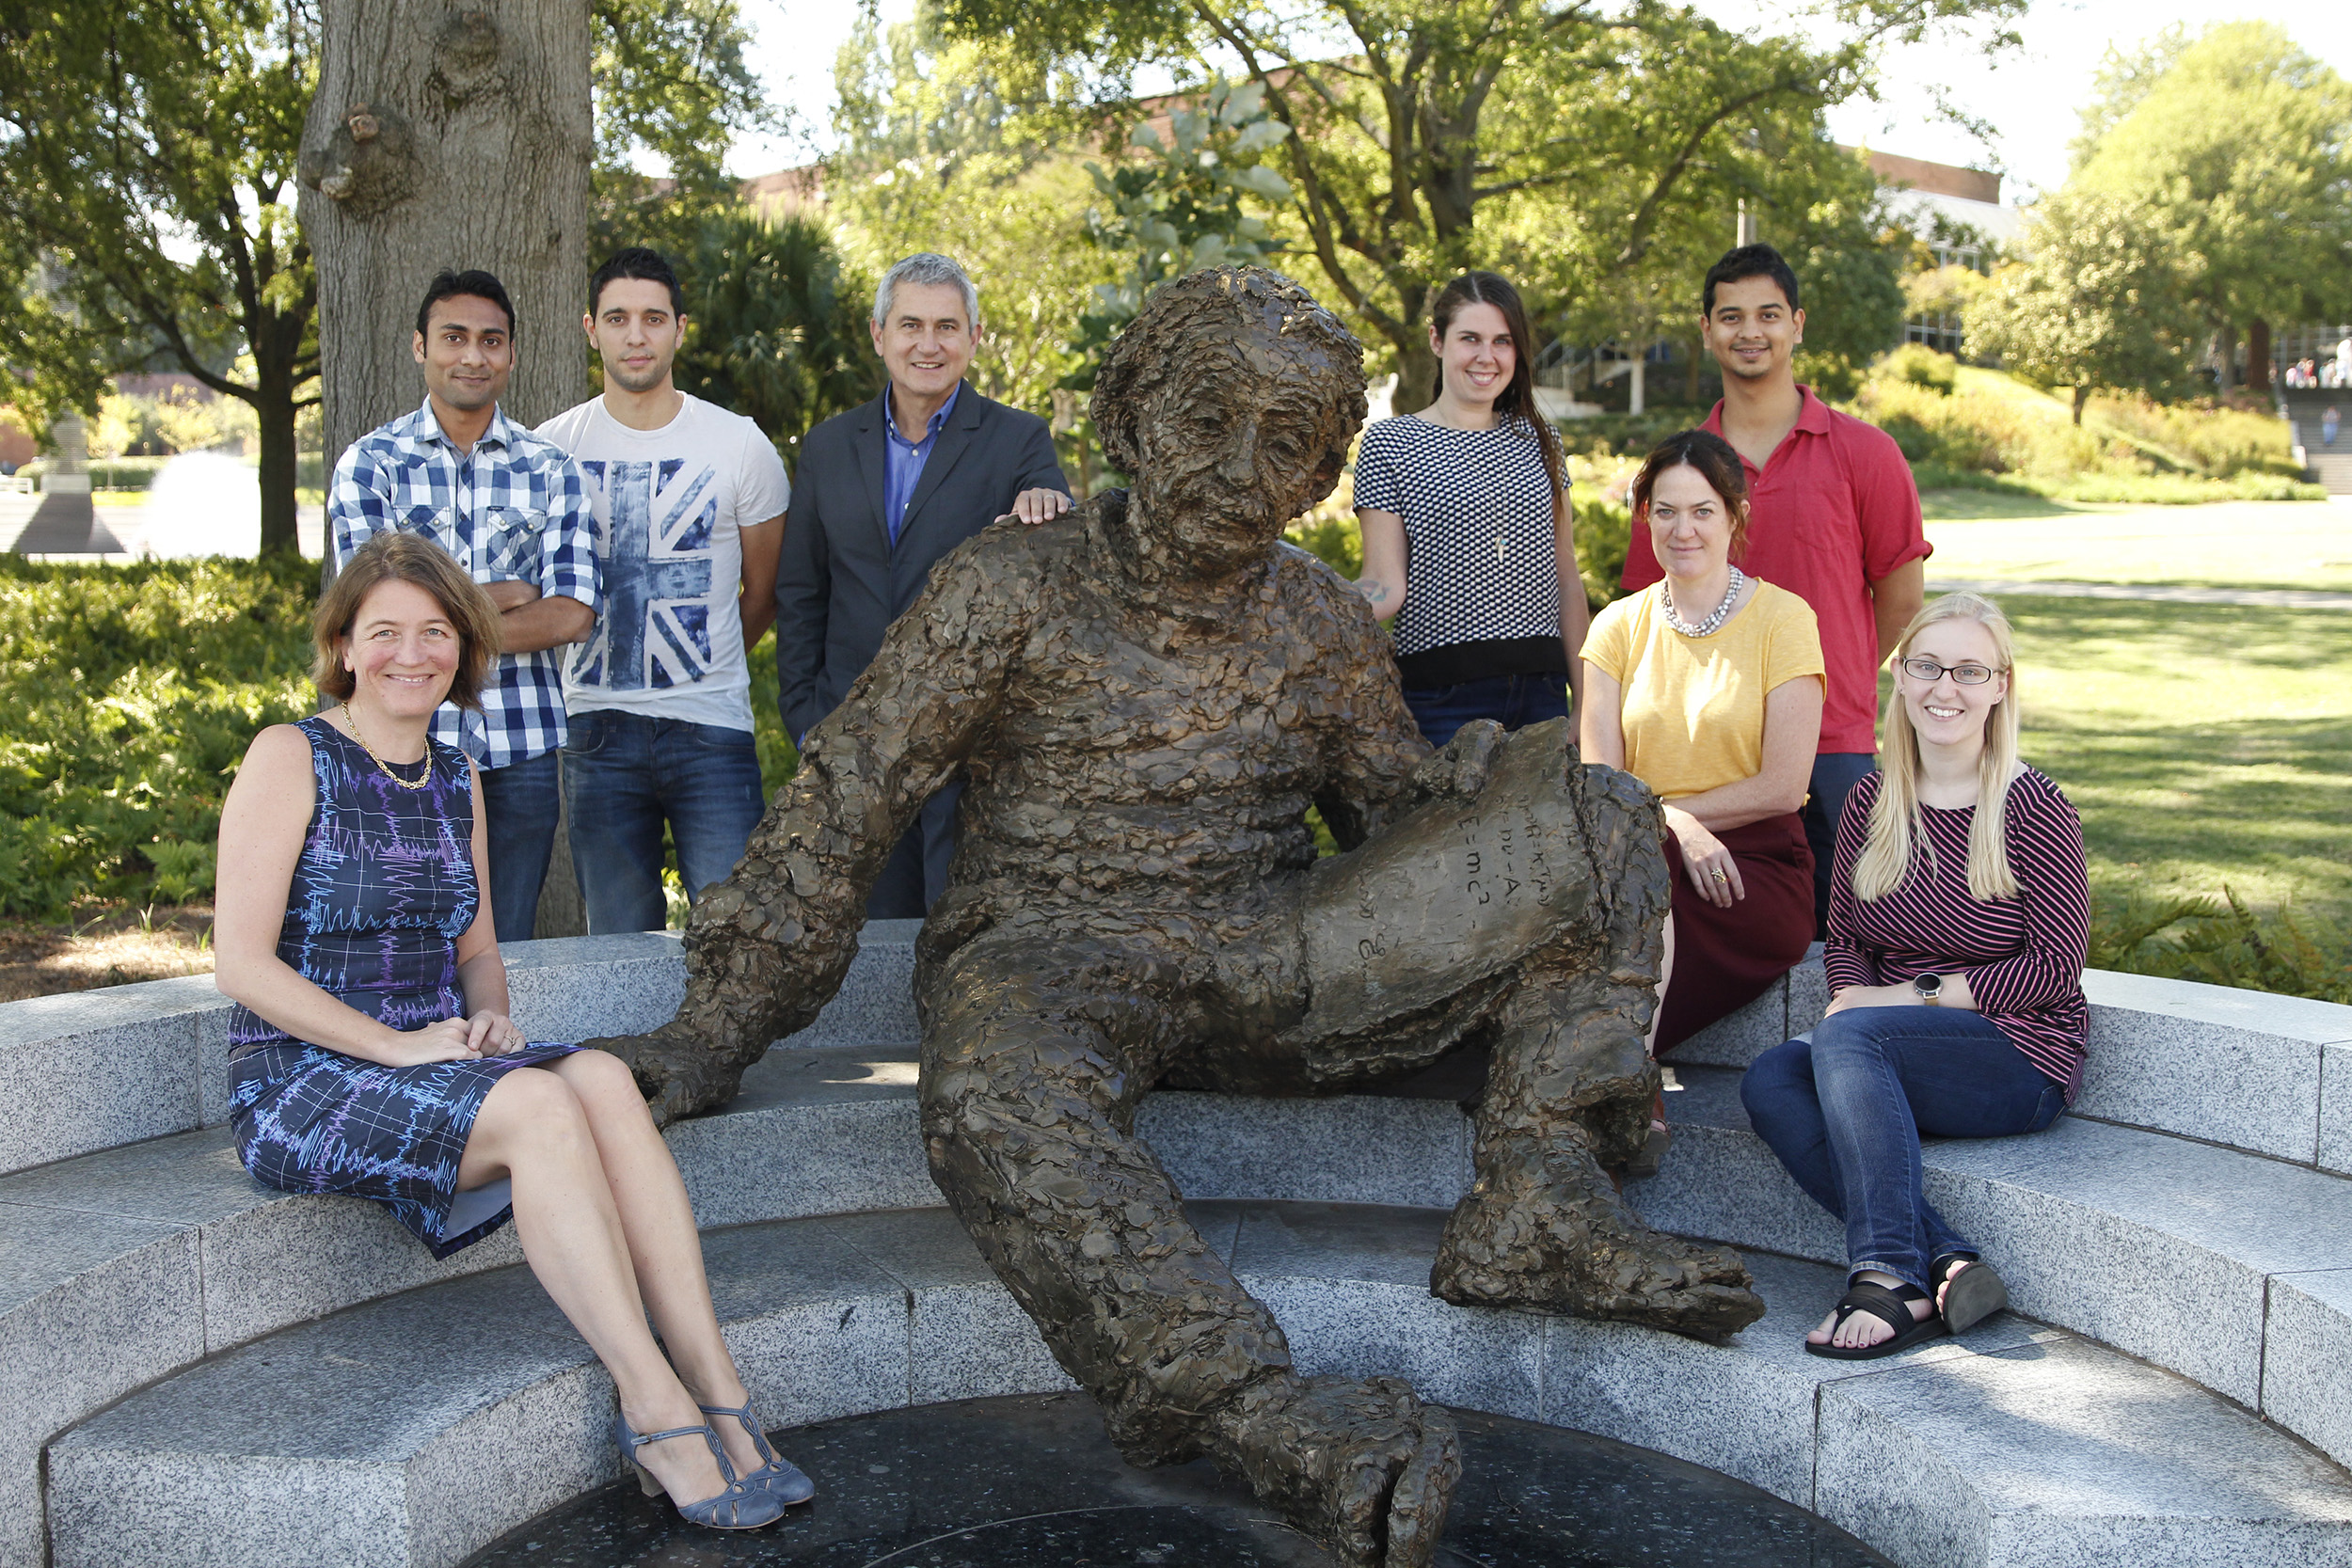 Members of the Georgia Tech LIGO team at the Albert Einstein statue on campus.